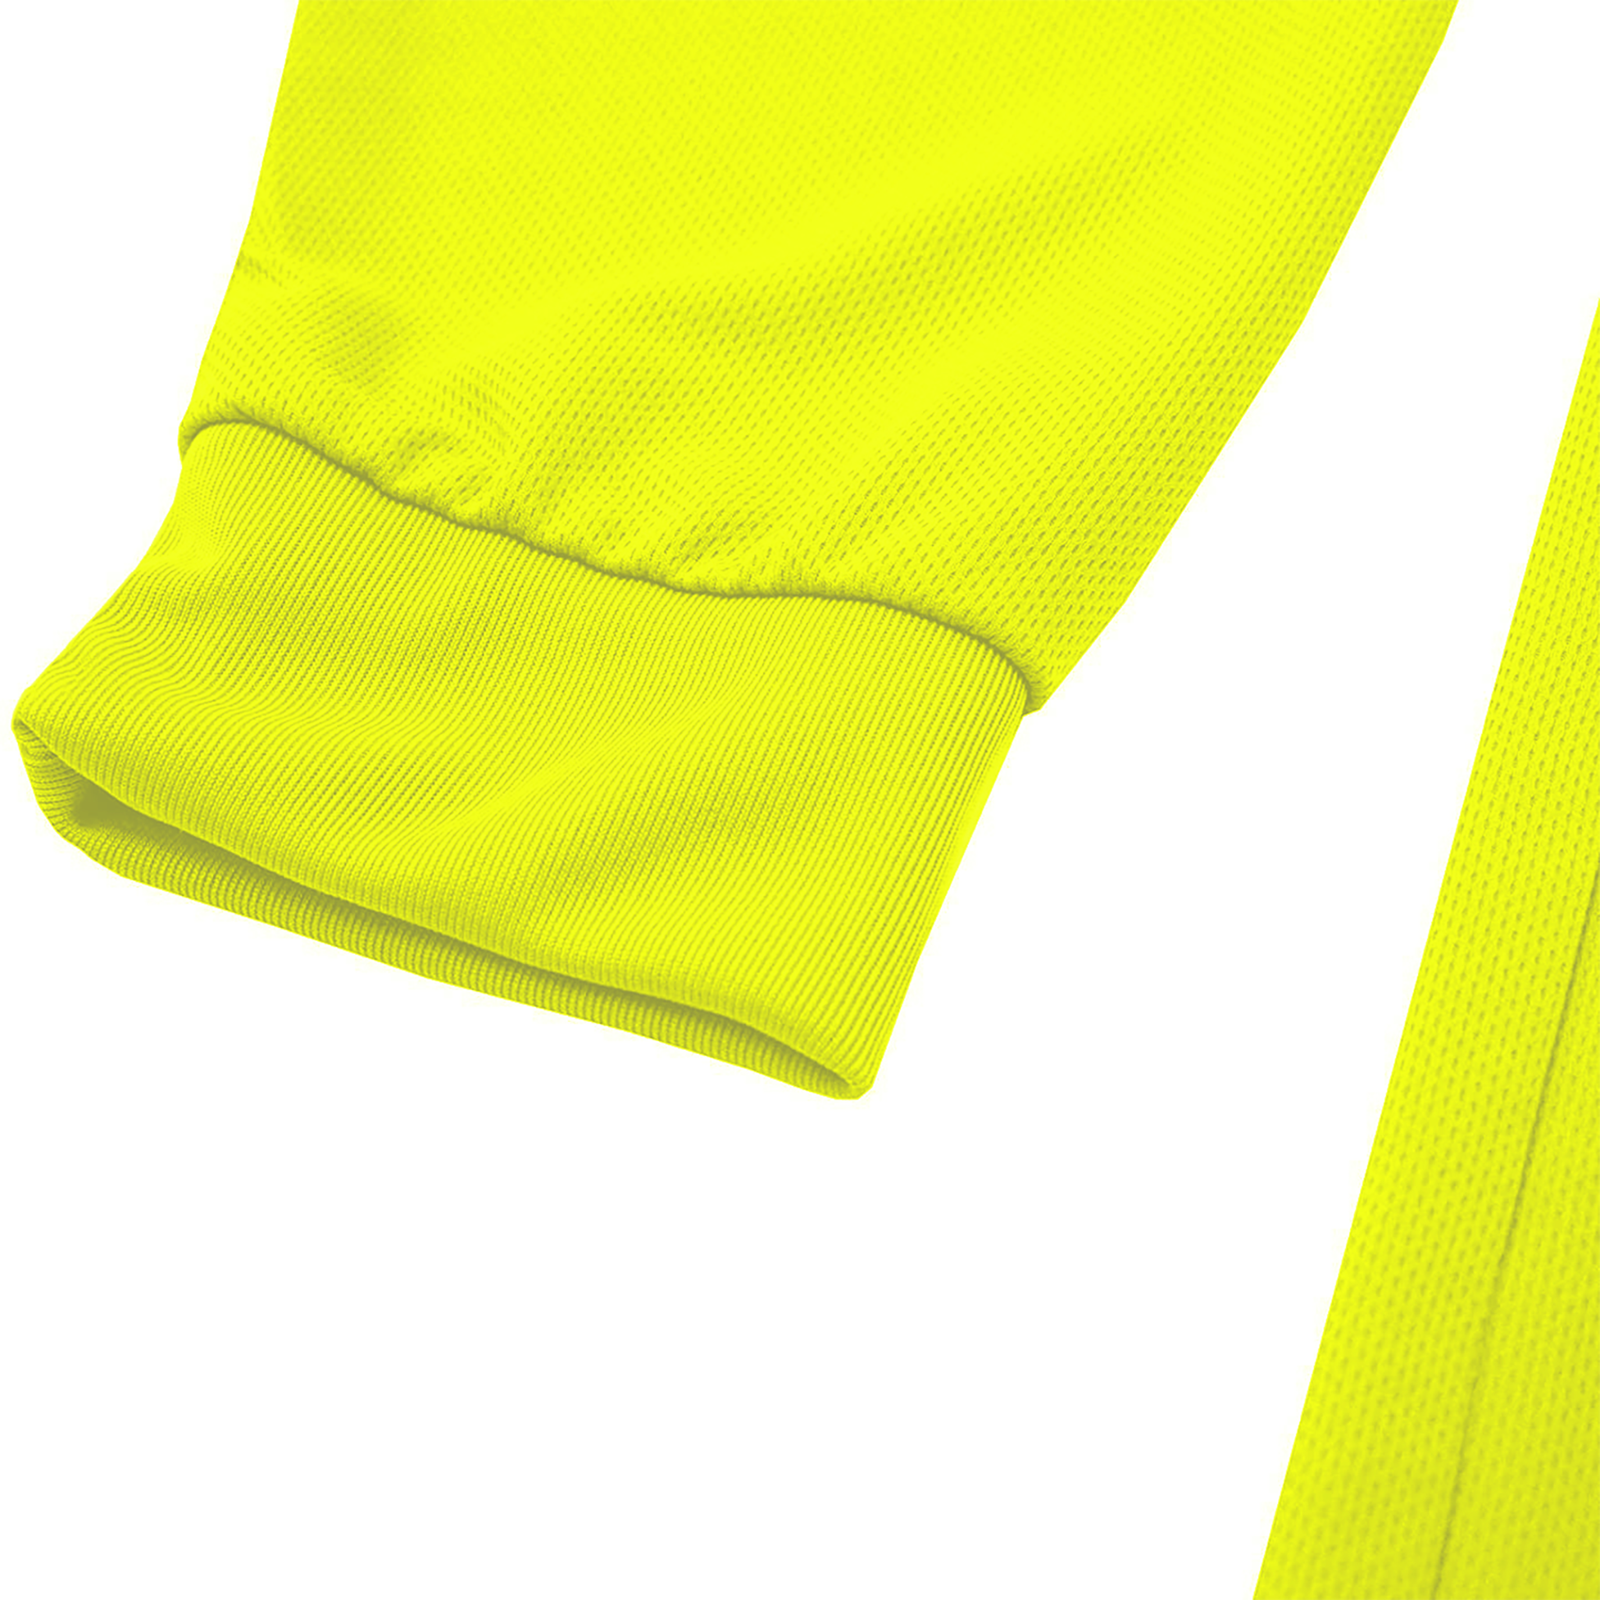 Elastic cuff of the Jorestech yellow long sleeve safety shirt